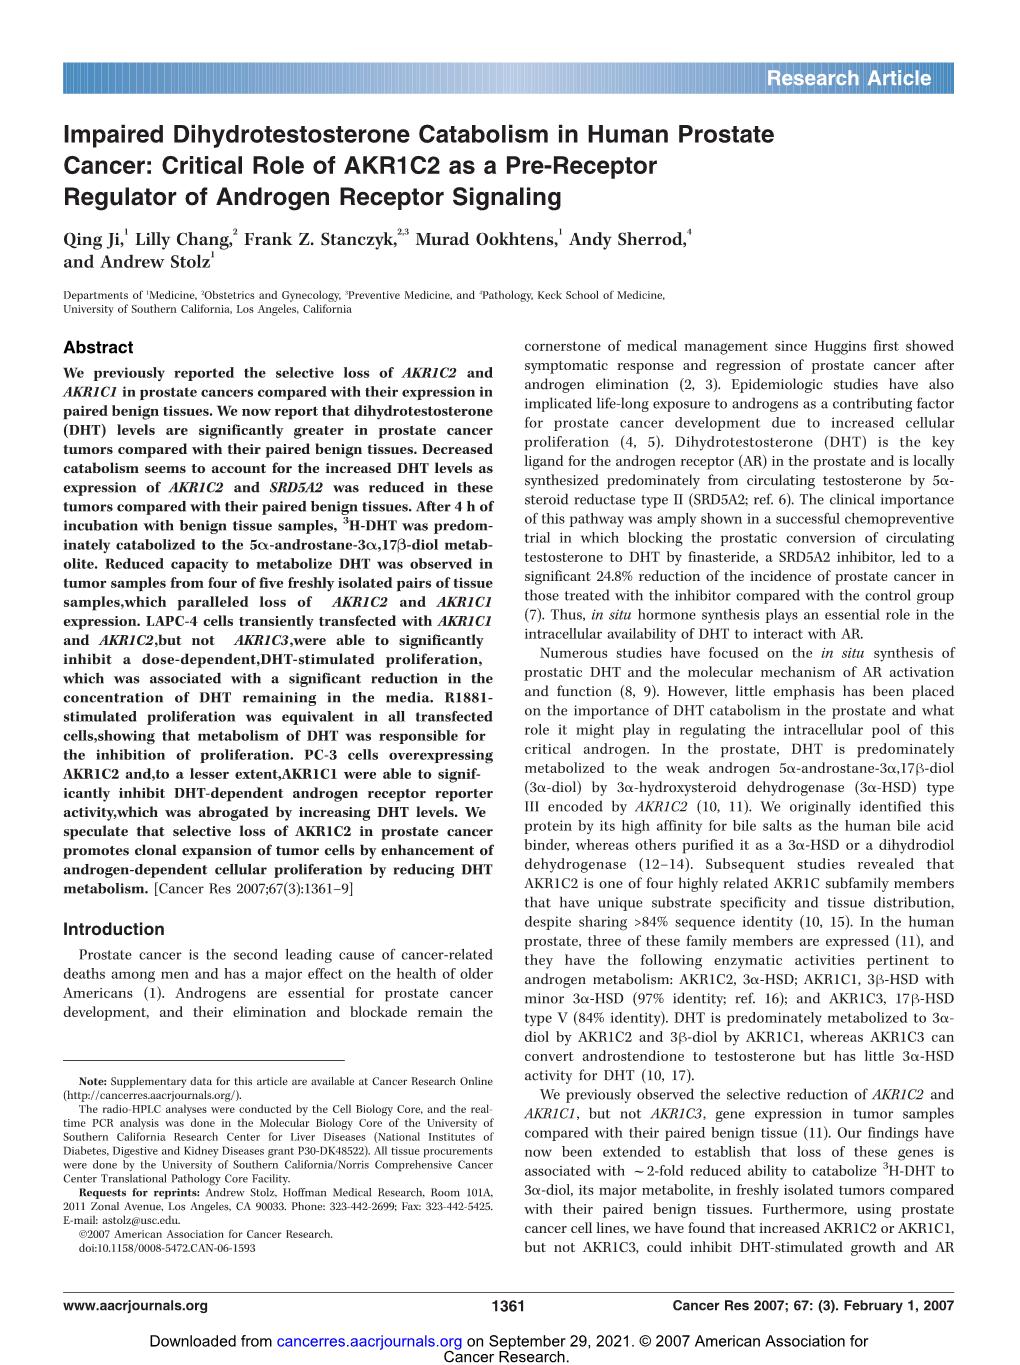 Critical Role of AKR1C2 As a Pre-Receptor Regulator of Androgen Receptor Signaling